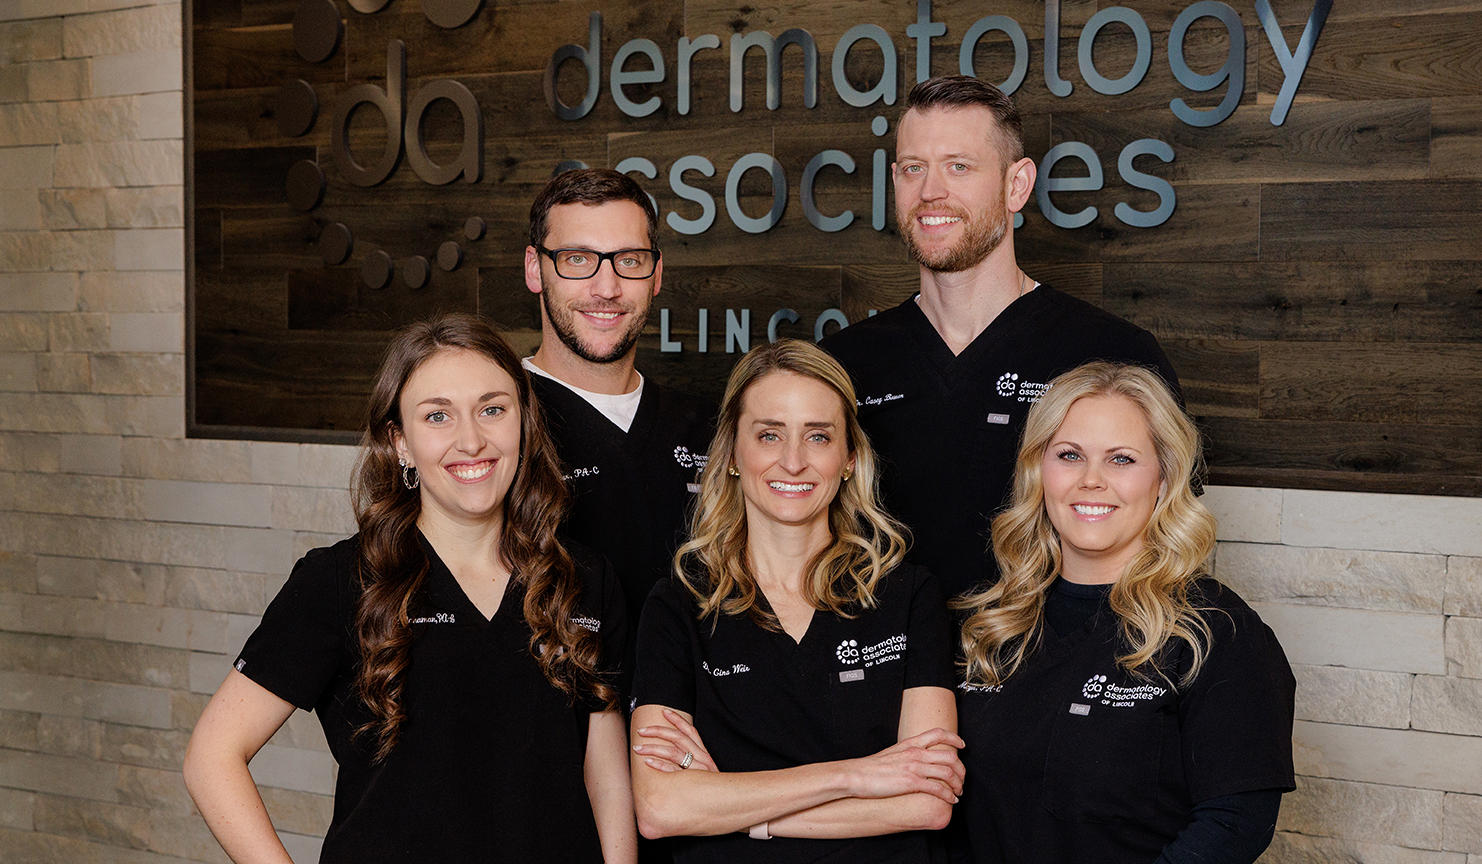 Dermatology Associates of Lincoln, LLC